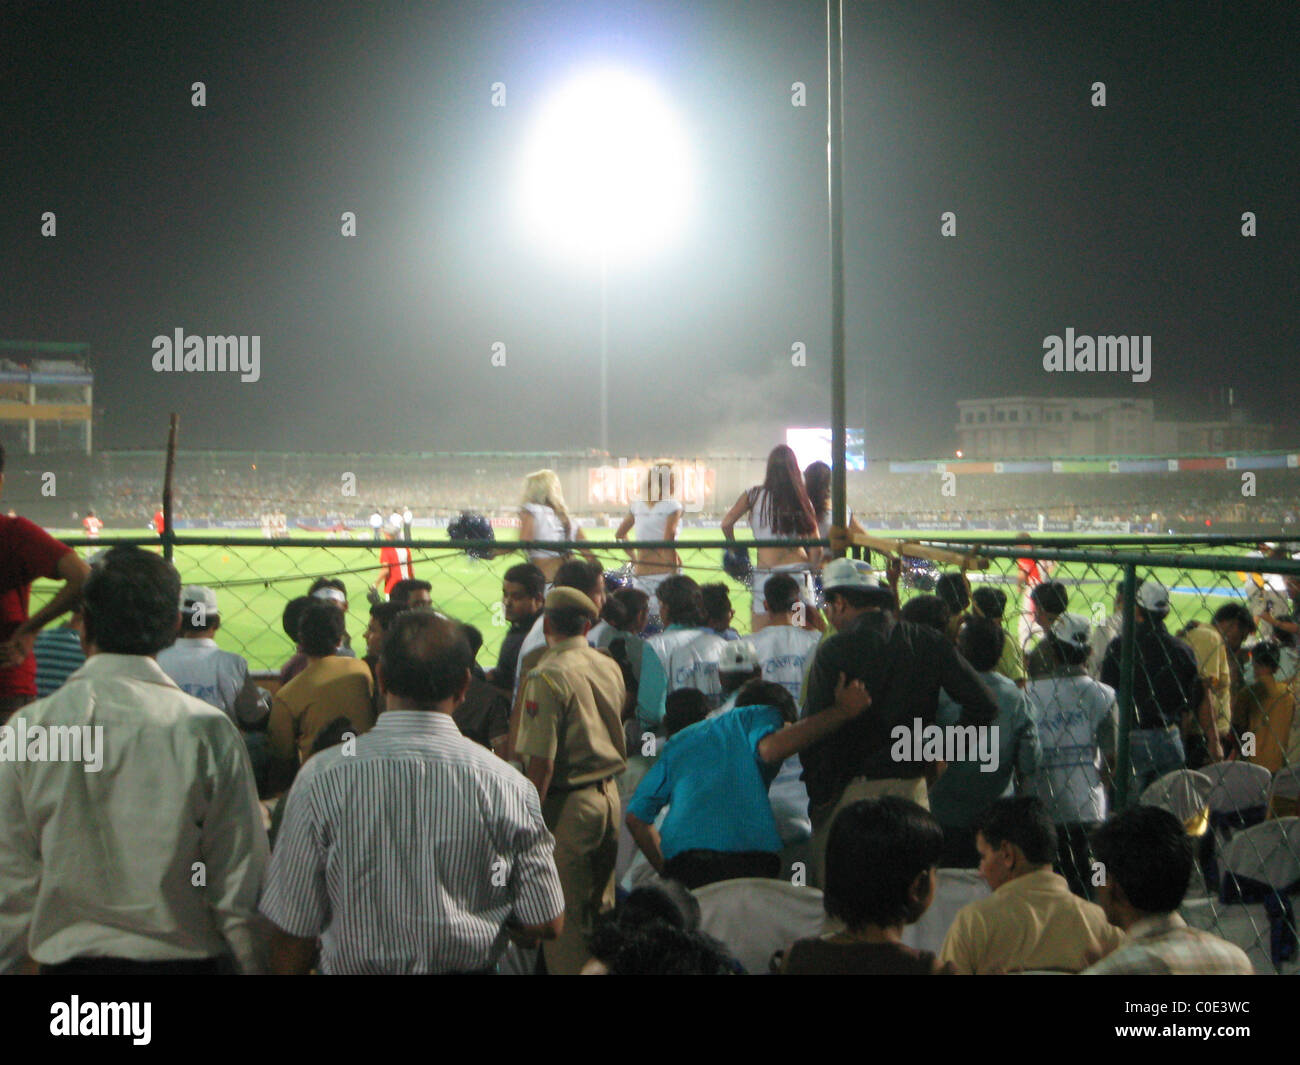 DLF IPL cricket entre Rajasthan Royals et Kings XI Punjab, au stade Sawai Mansingh Jaipur, Inde - 26-04-08 Banque D'Images